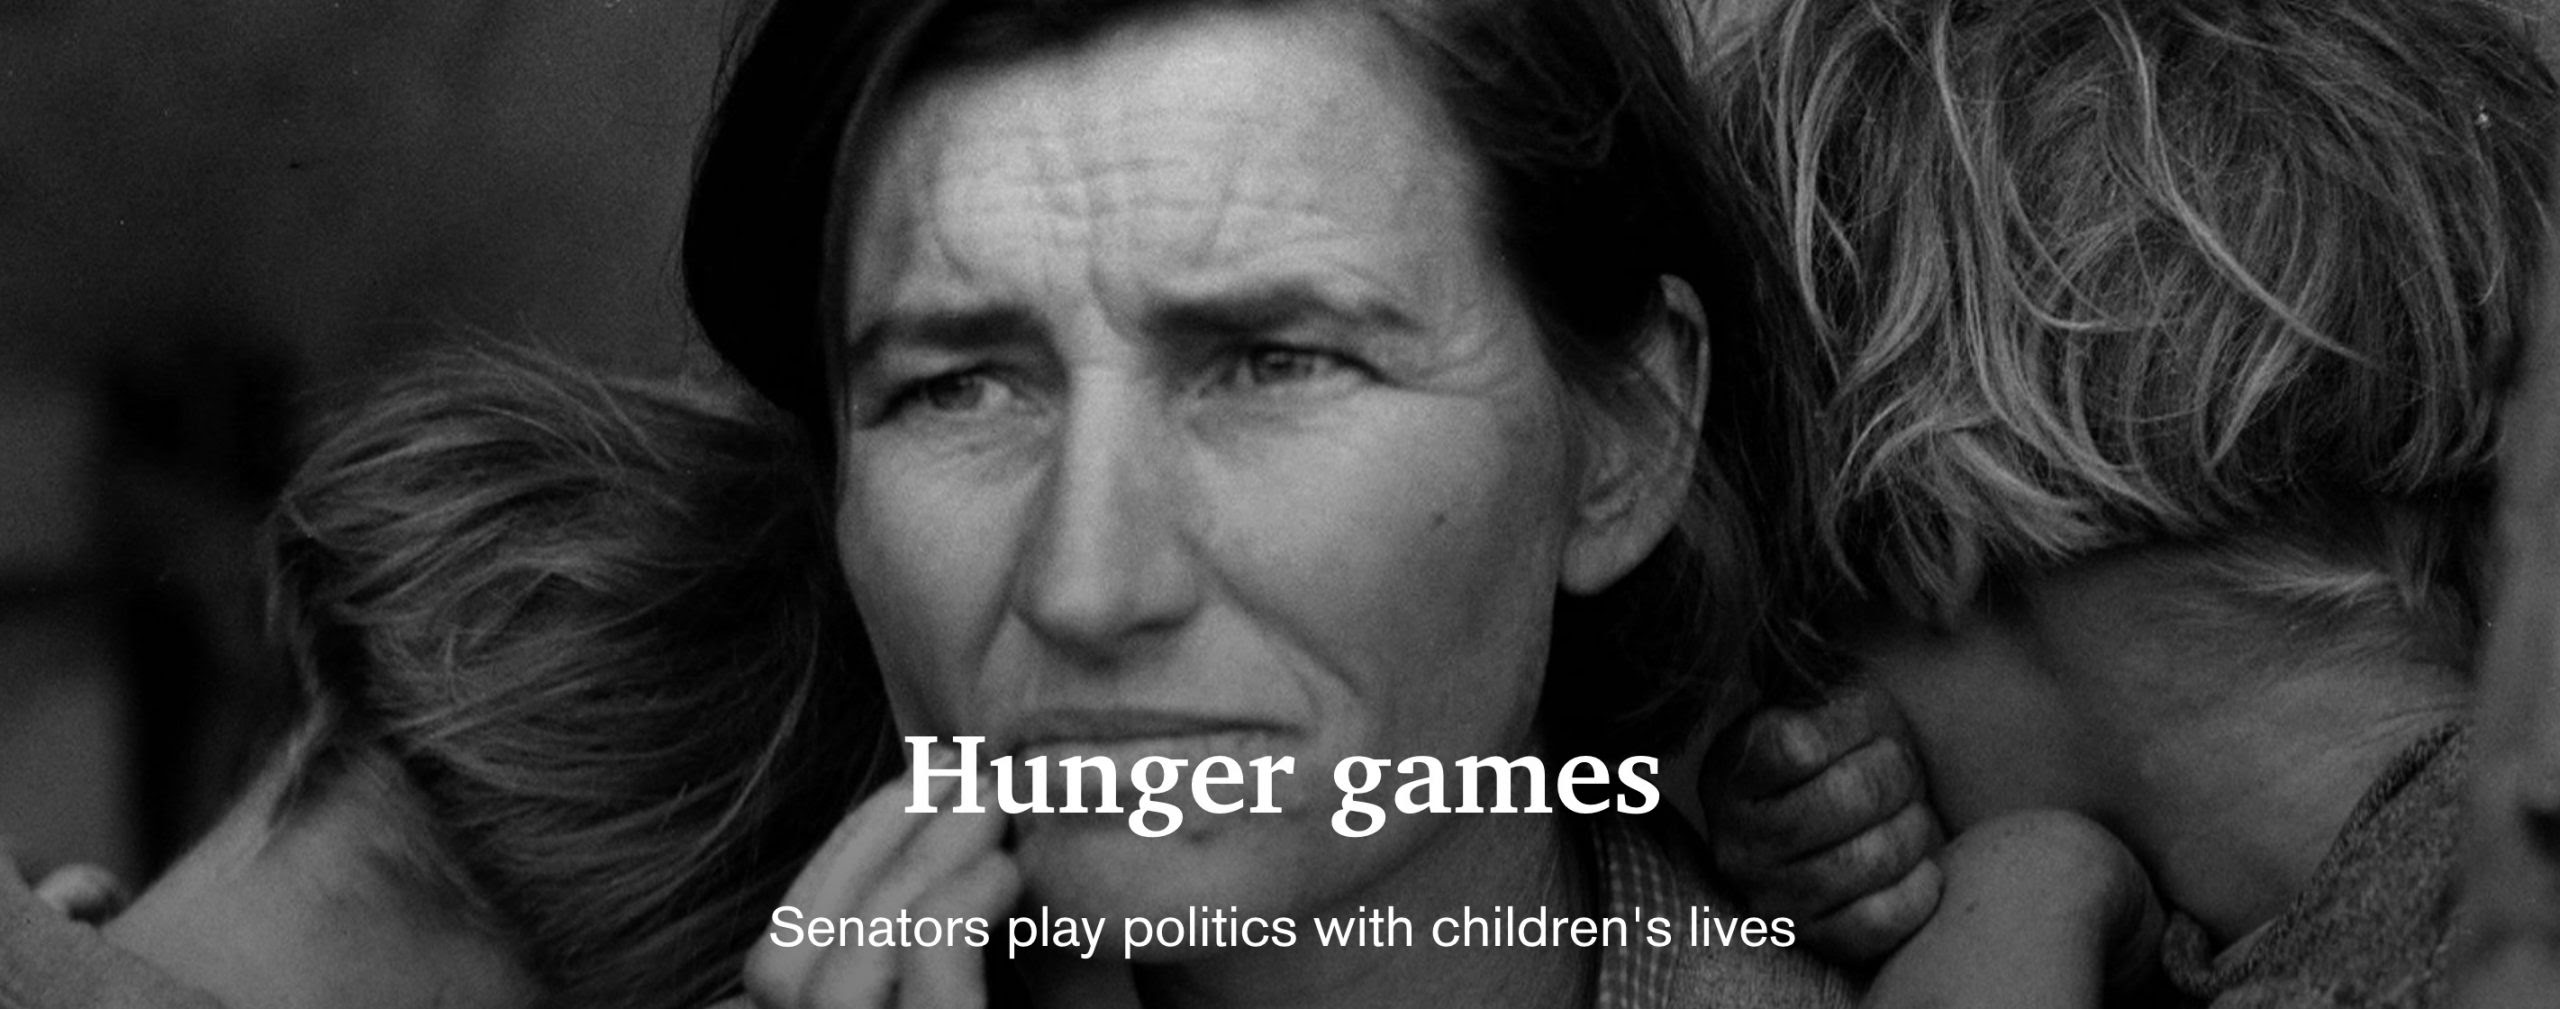 Hunger games: Senators play politics with children's lives